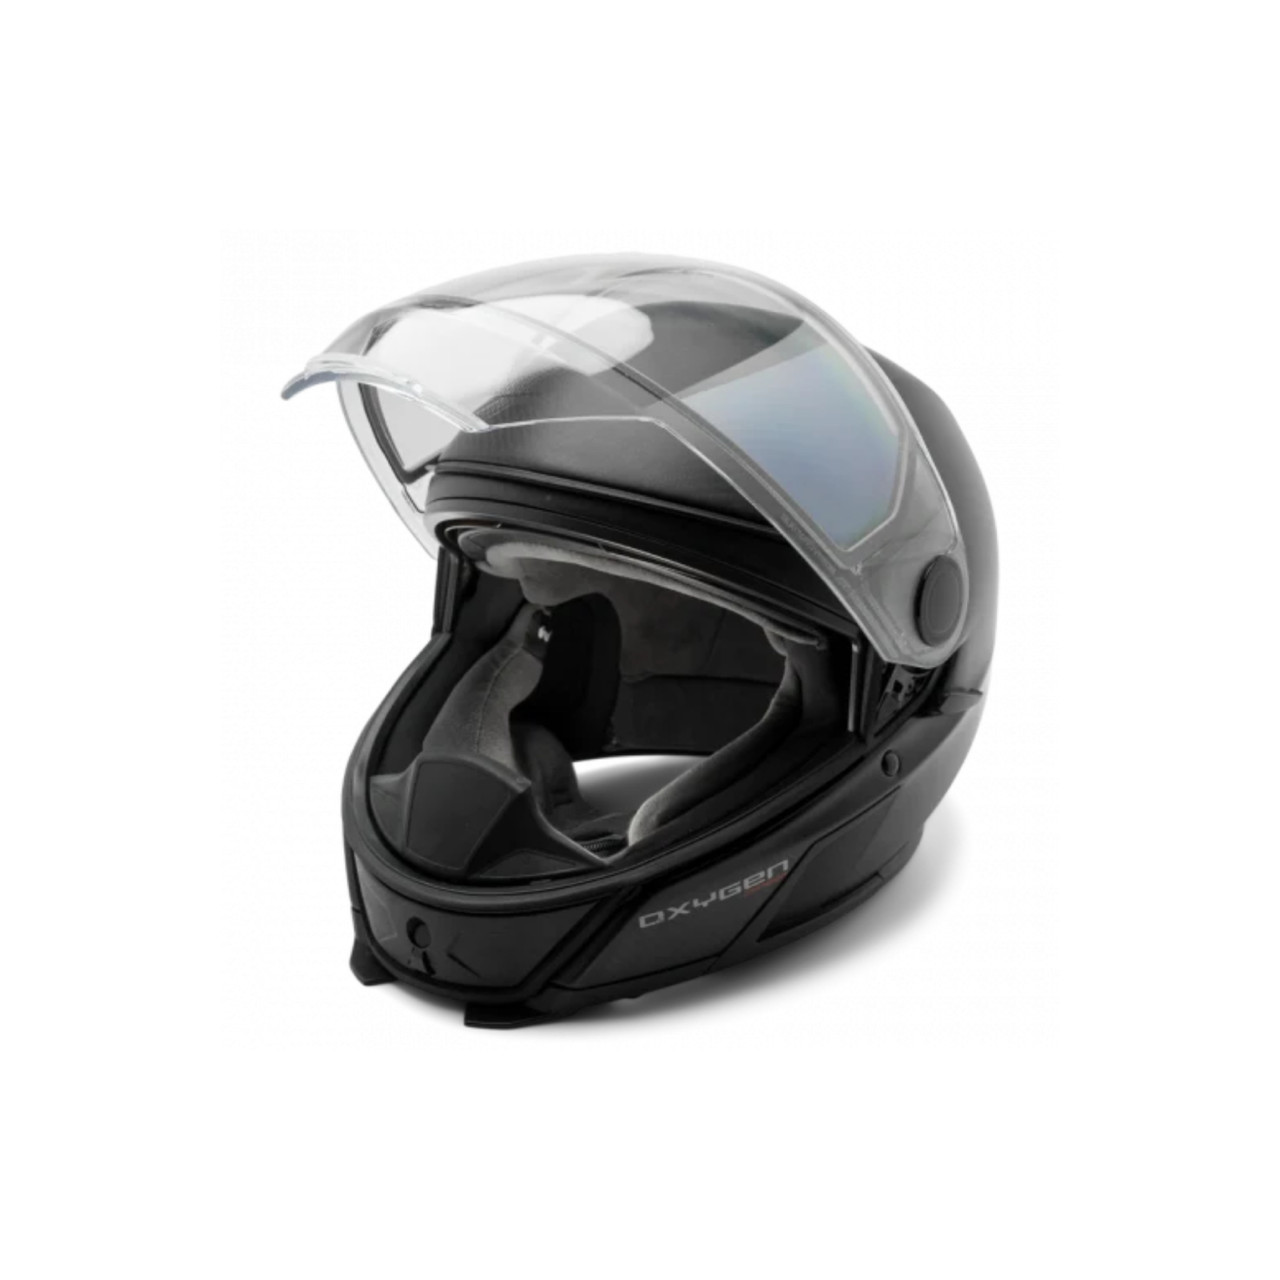 Ski-Doo New OEM, Small Oxygen Carbon Helmet, 9290280490